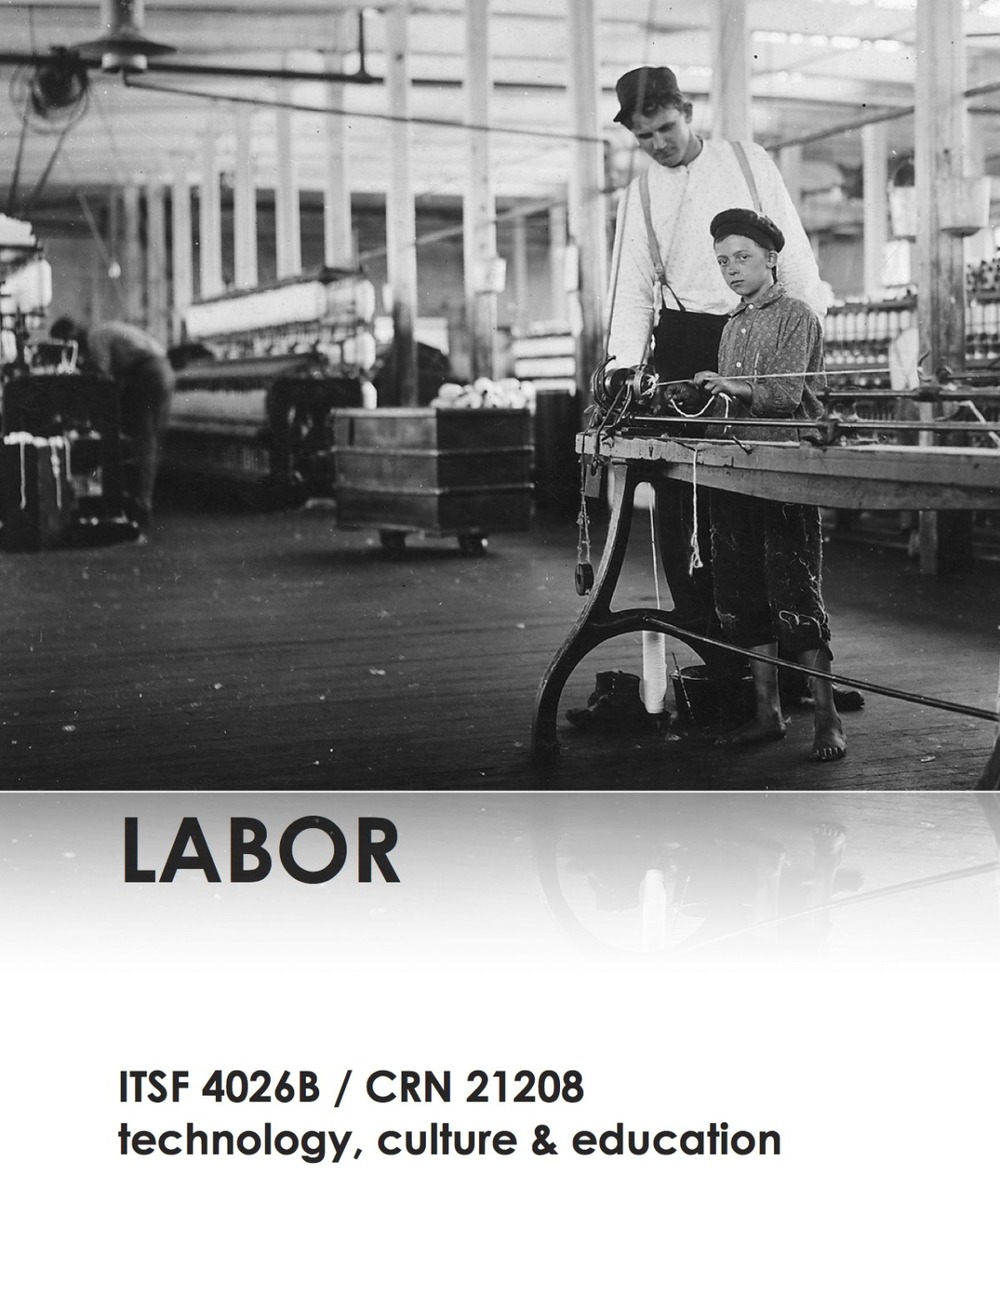 itsf 4026b flyers - labor.jpg